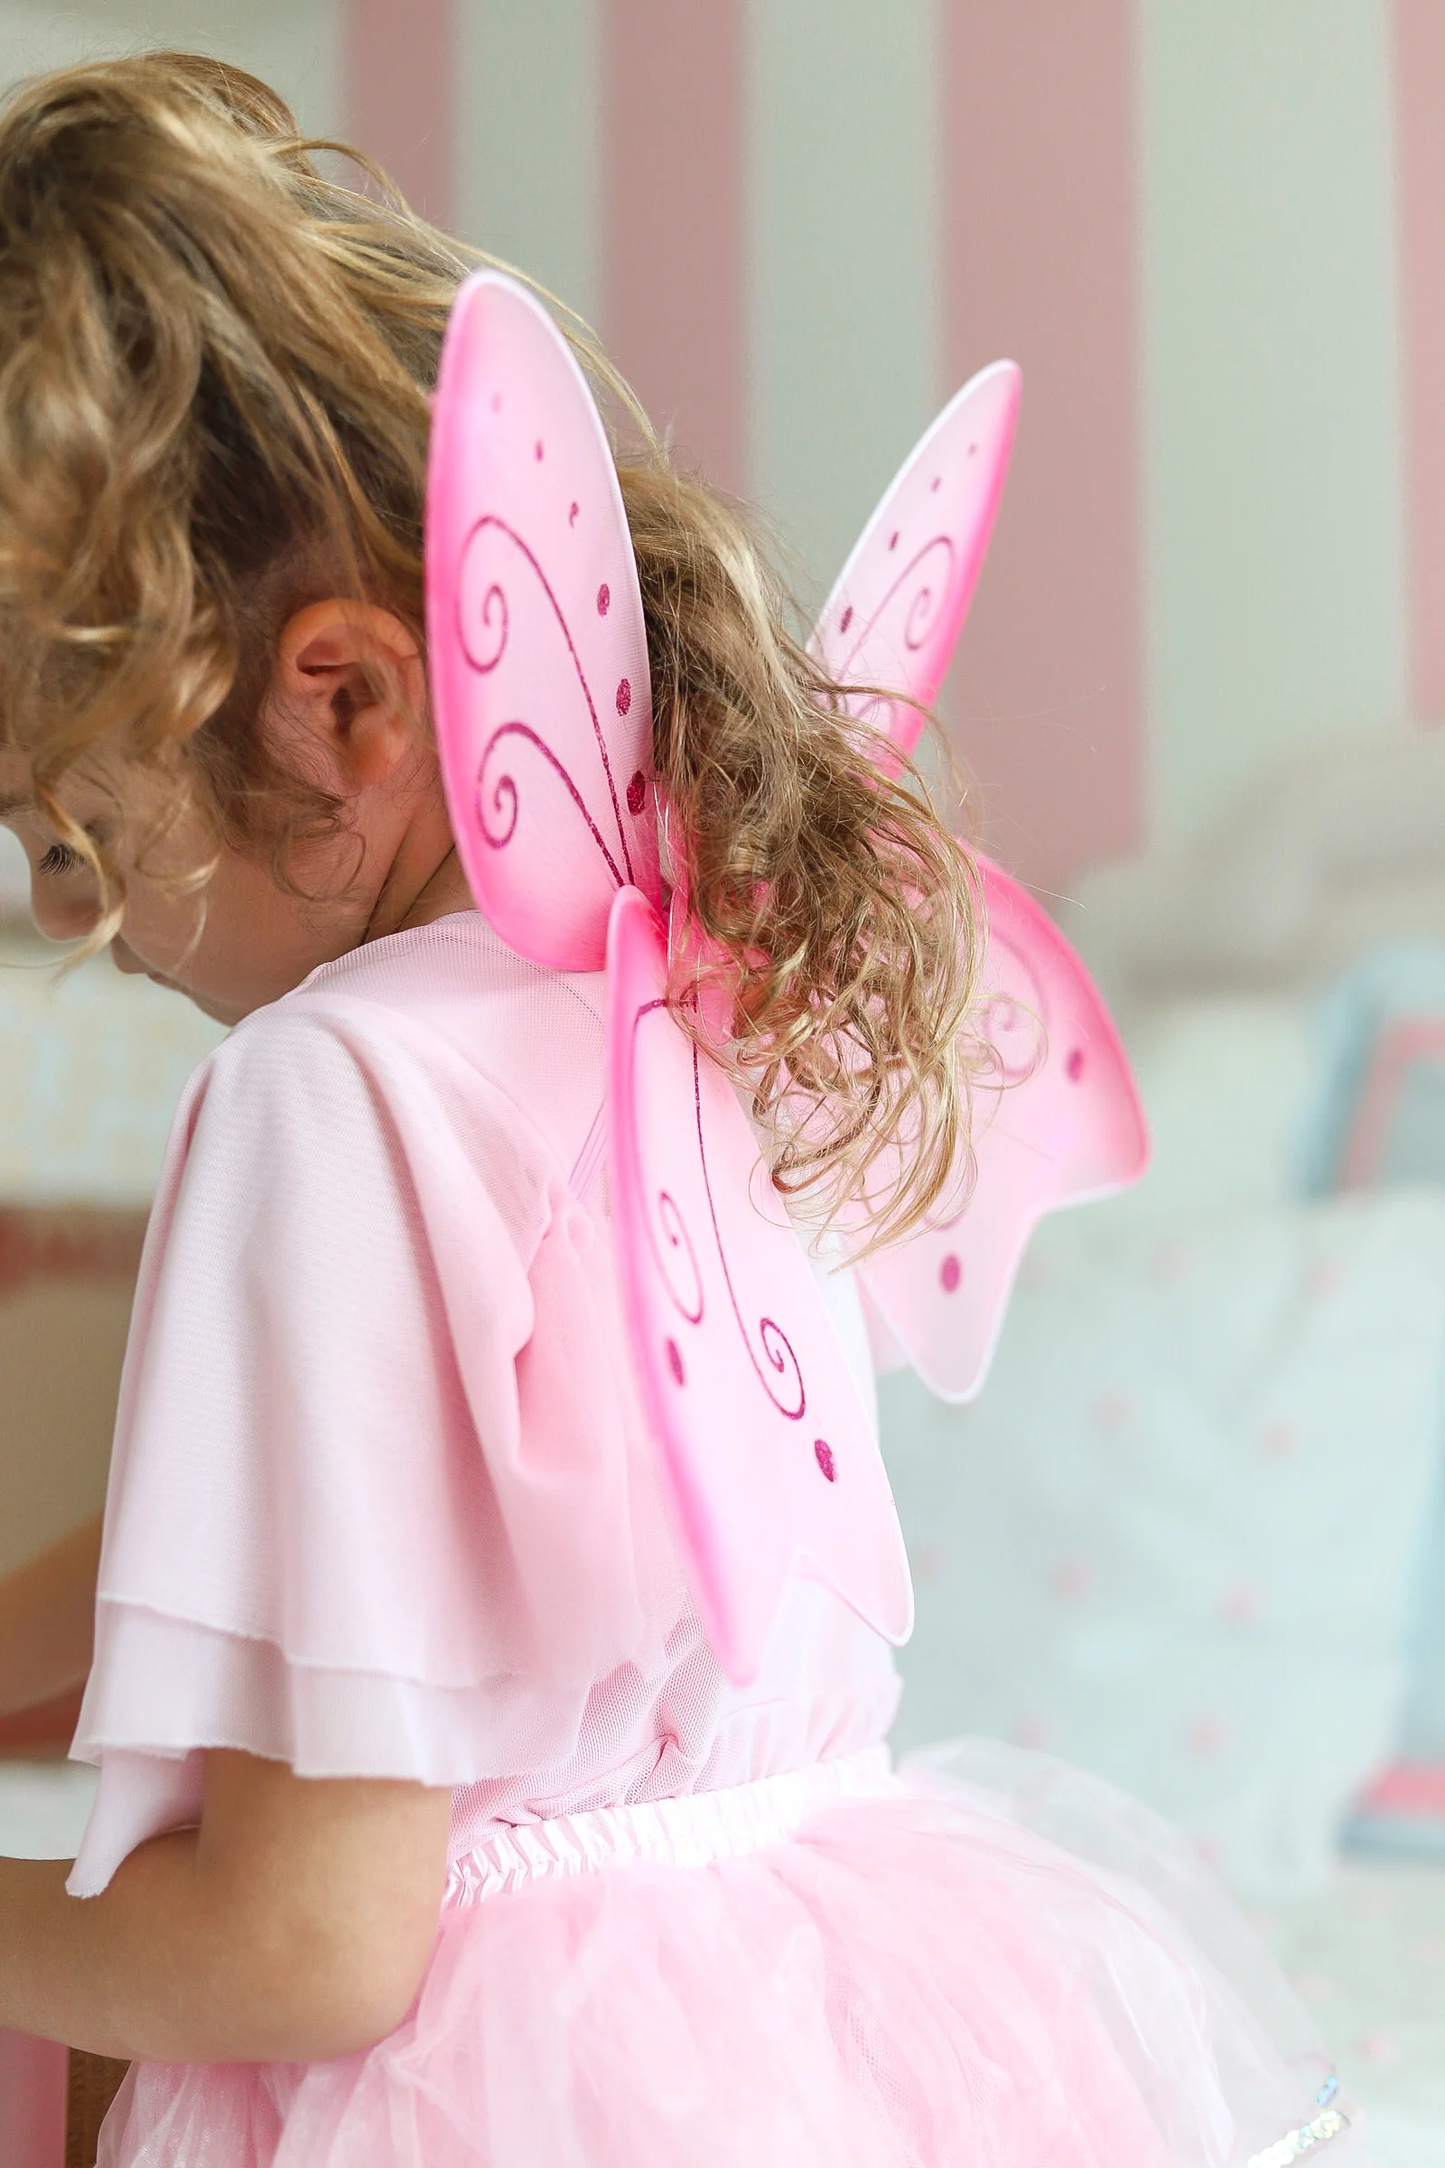 Magical Pink Mini Fairy Wings